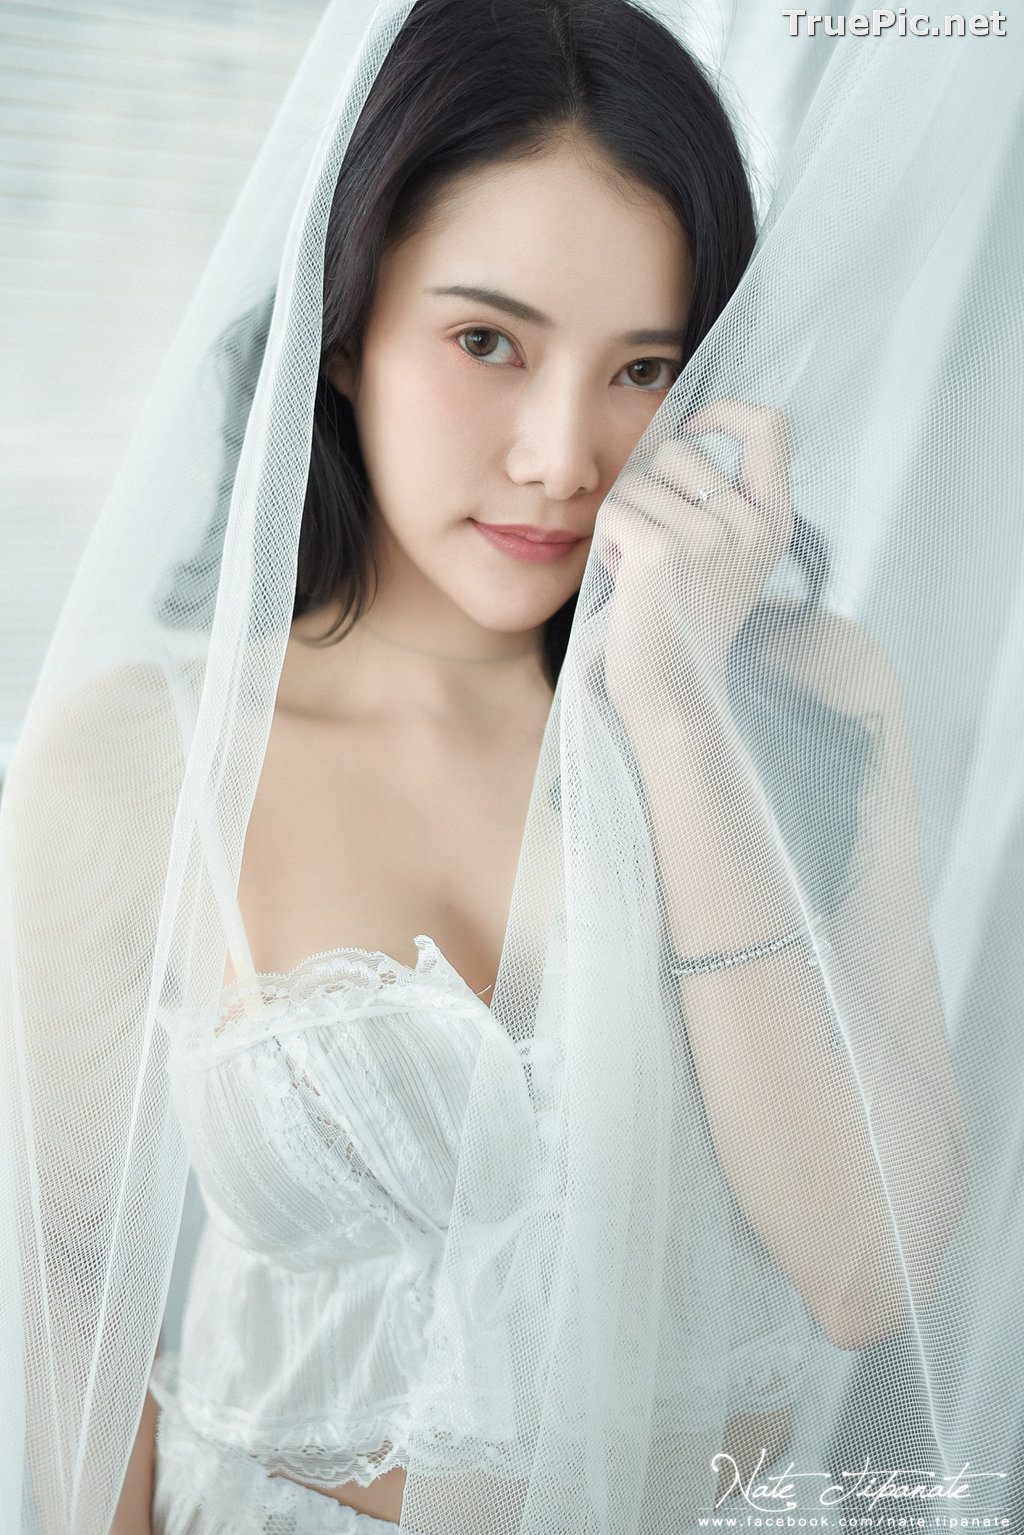 Image Thailand Model - Nattanicha Pw - Beautiful In White Sleepwear - TruePic.net - Picture-21